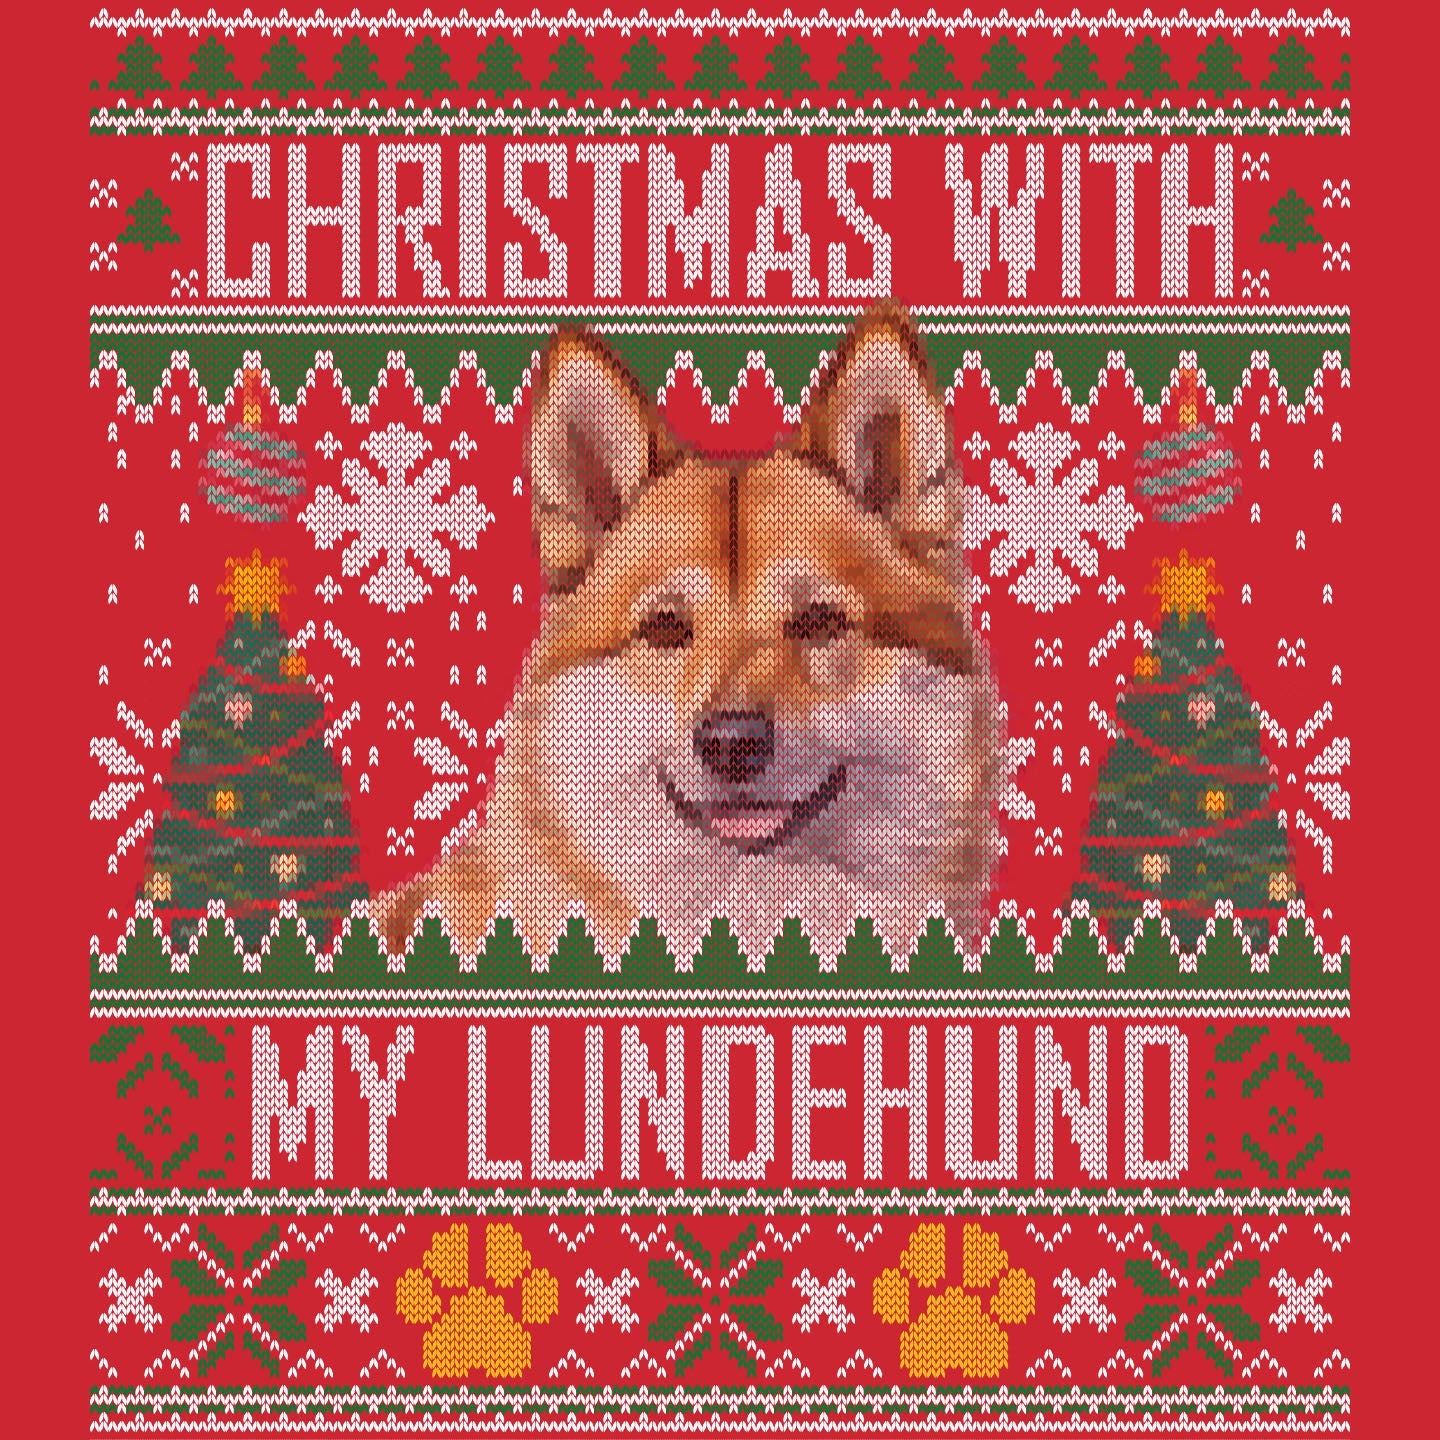 Ugly Sweater Christmas with My Norwegian Lundehund - Adult Unisex Long Sleeve T-Shirt